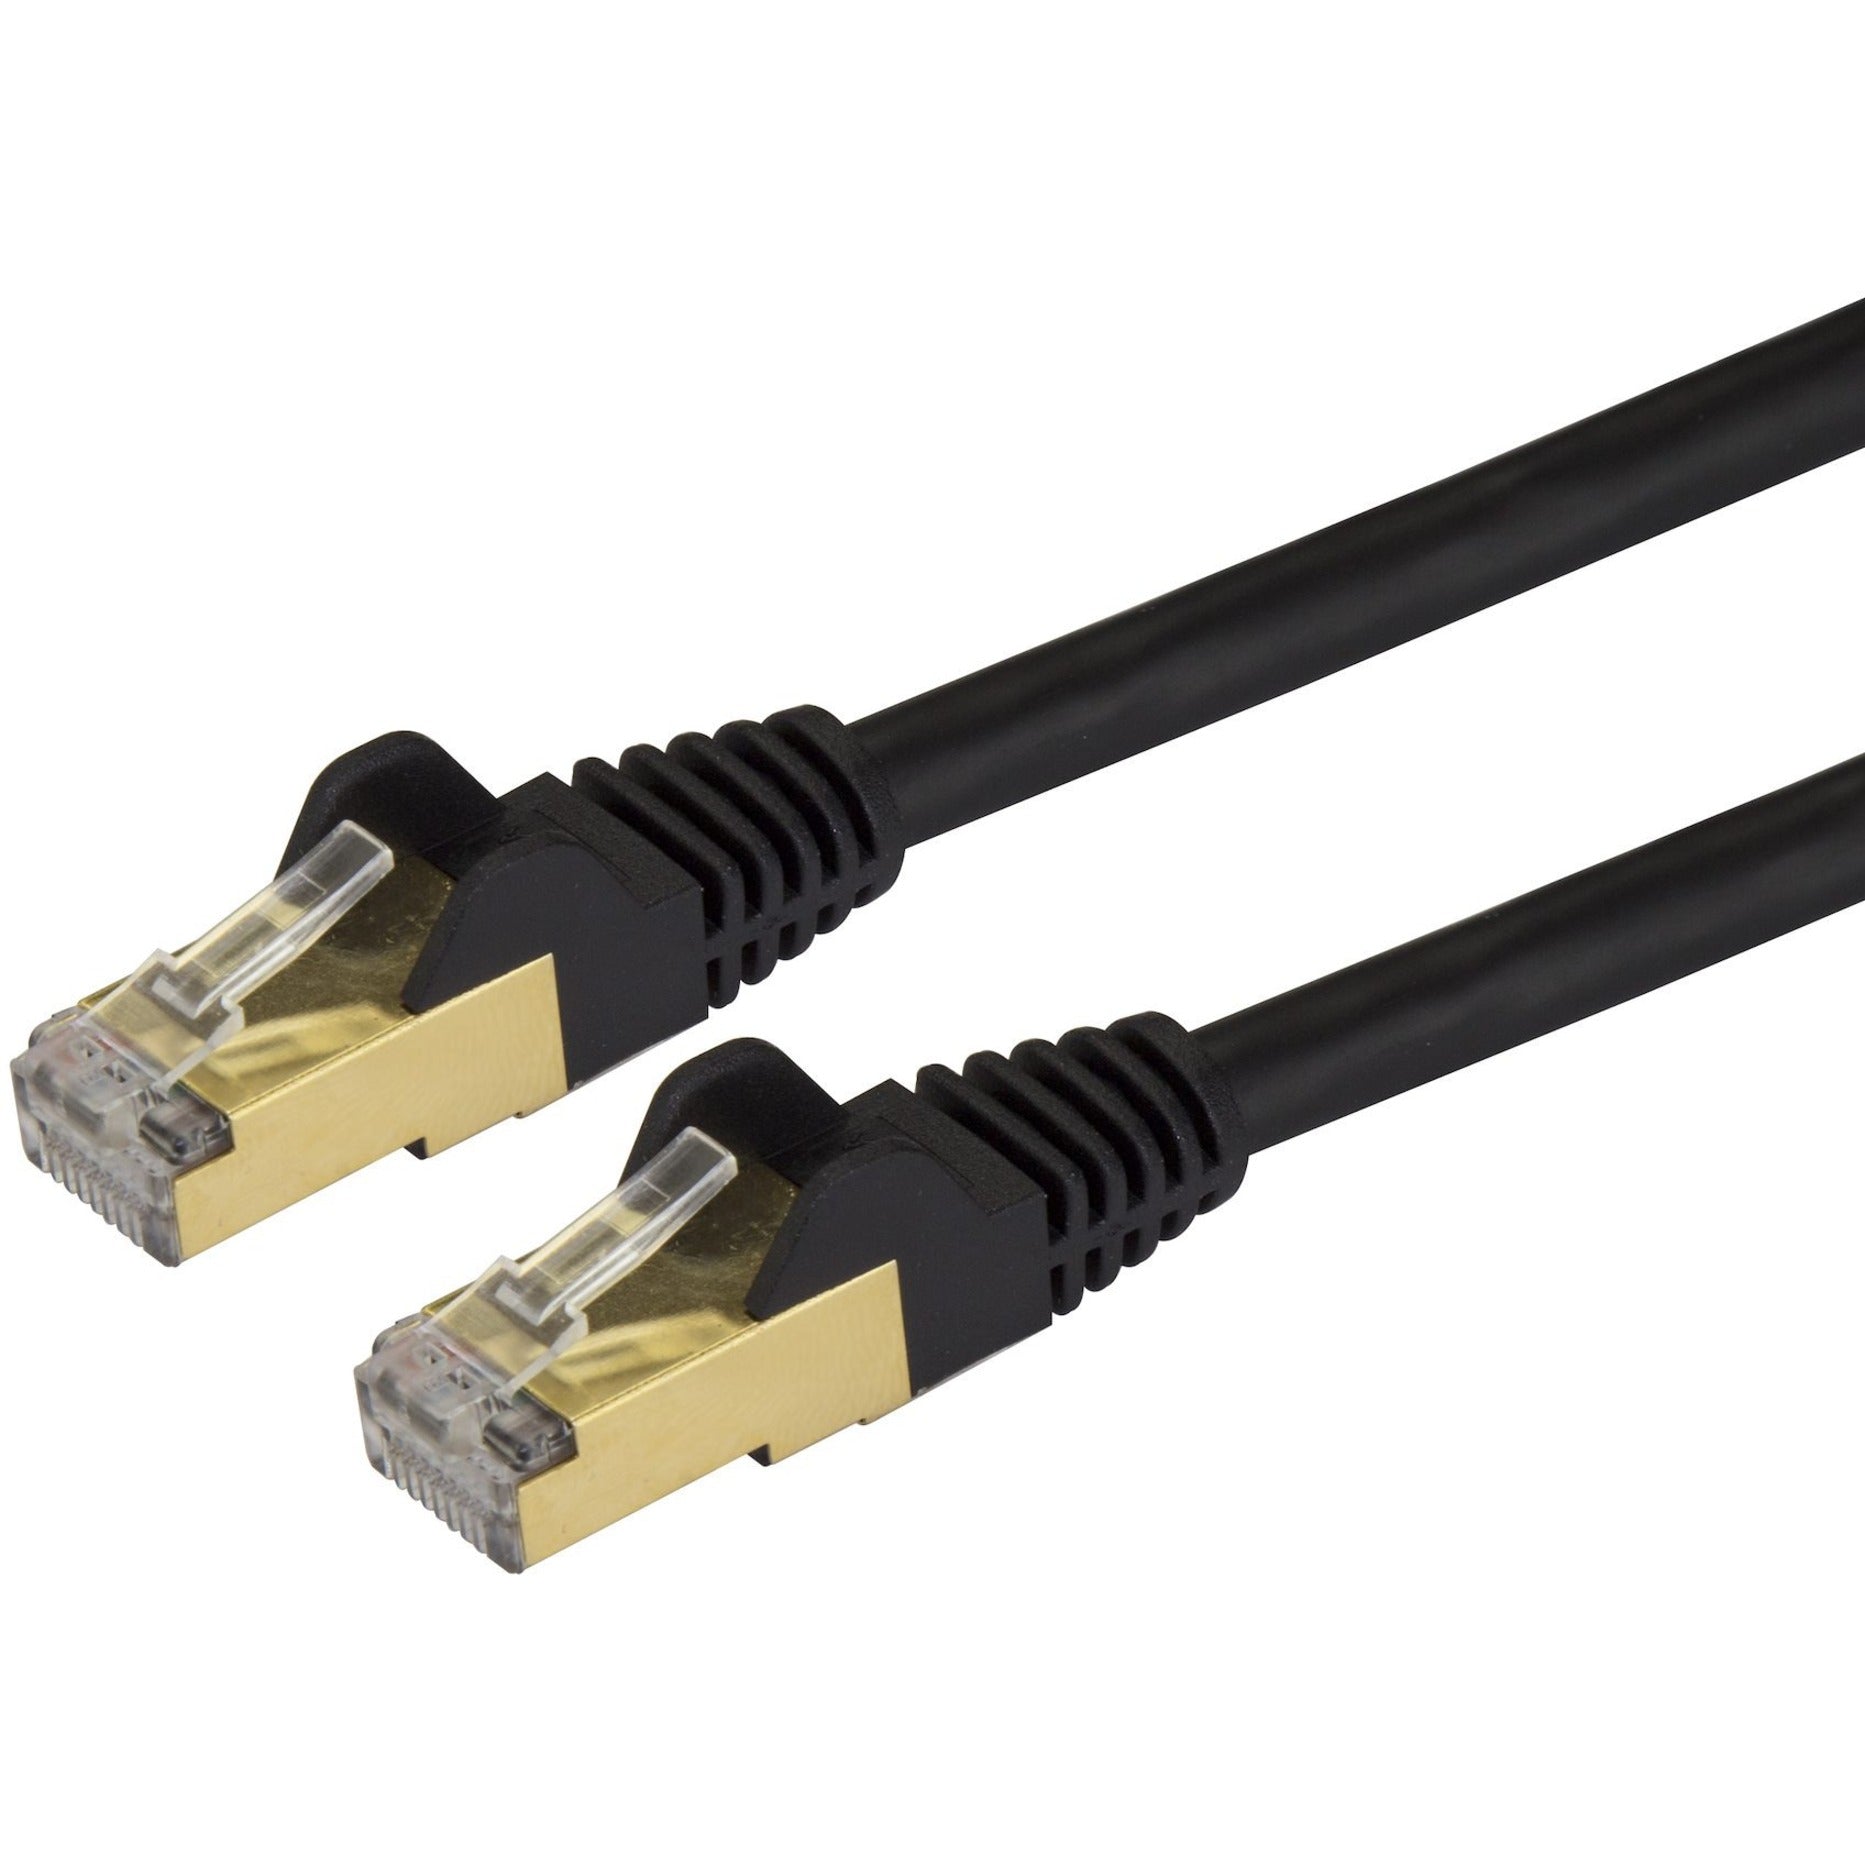 StarTech.com C6ASPAT8BK Cat6a Ethernet Patch Cable - Shielded (STP) - 8 ft., Black, Snagless RJ45 Ethernet Cord